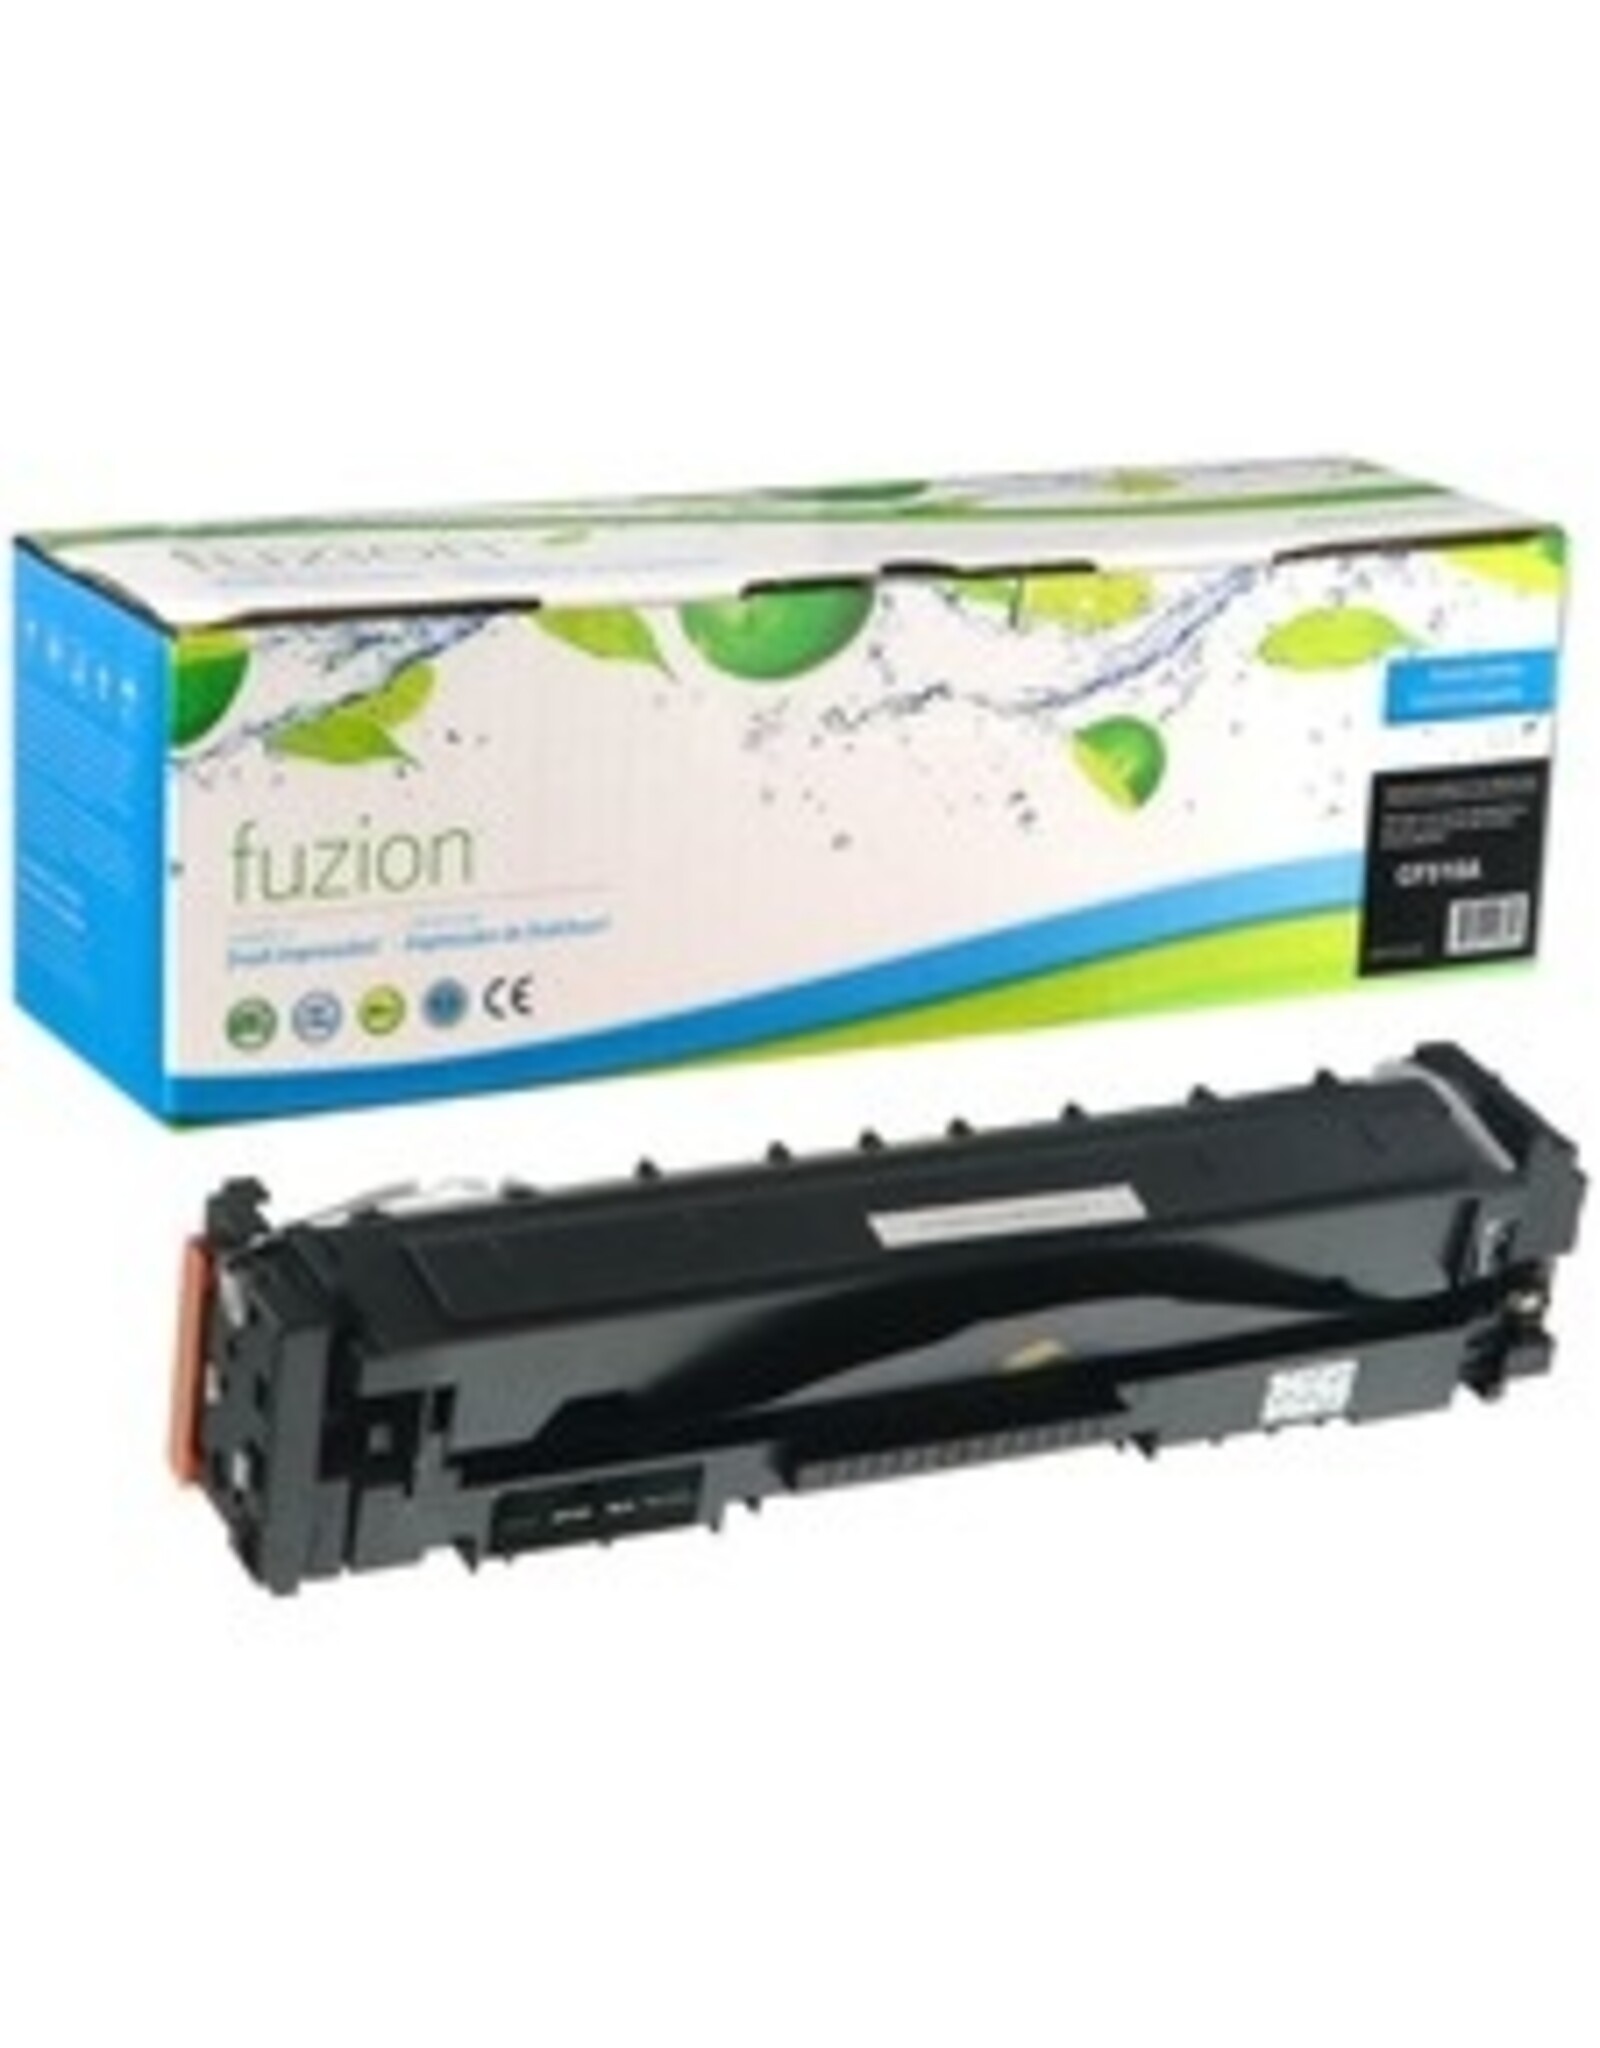 fuzion Toner Cartridge - Alternative for HP CF510A - Black